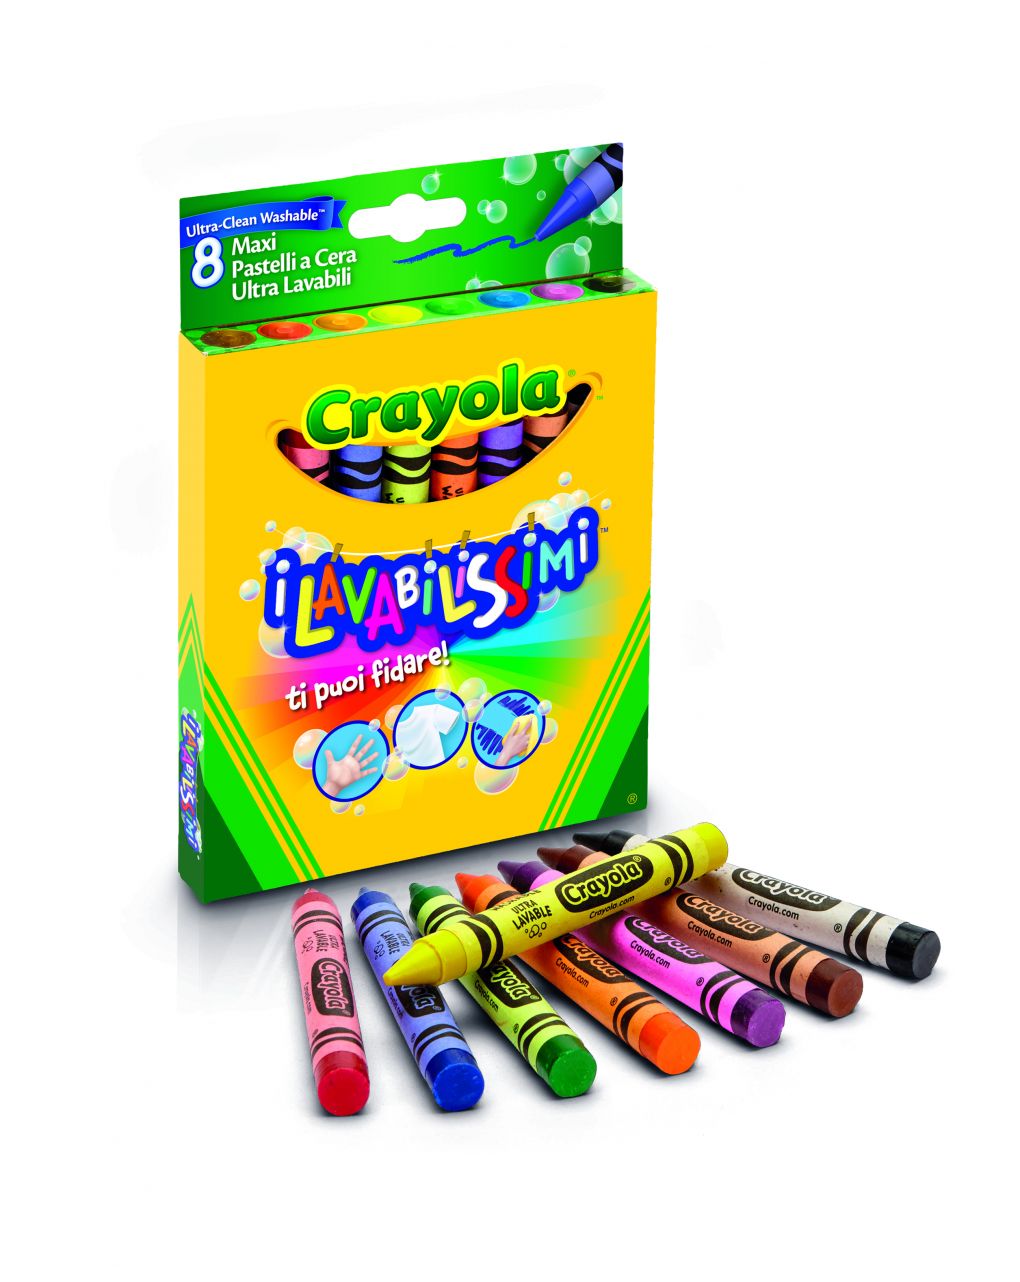 Crayola - 8 maxi pastelli a cera lavabili - Crayola